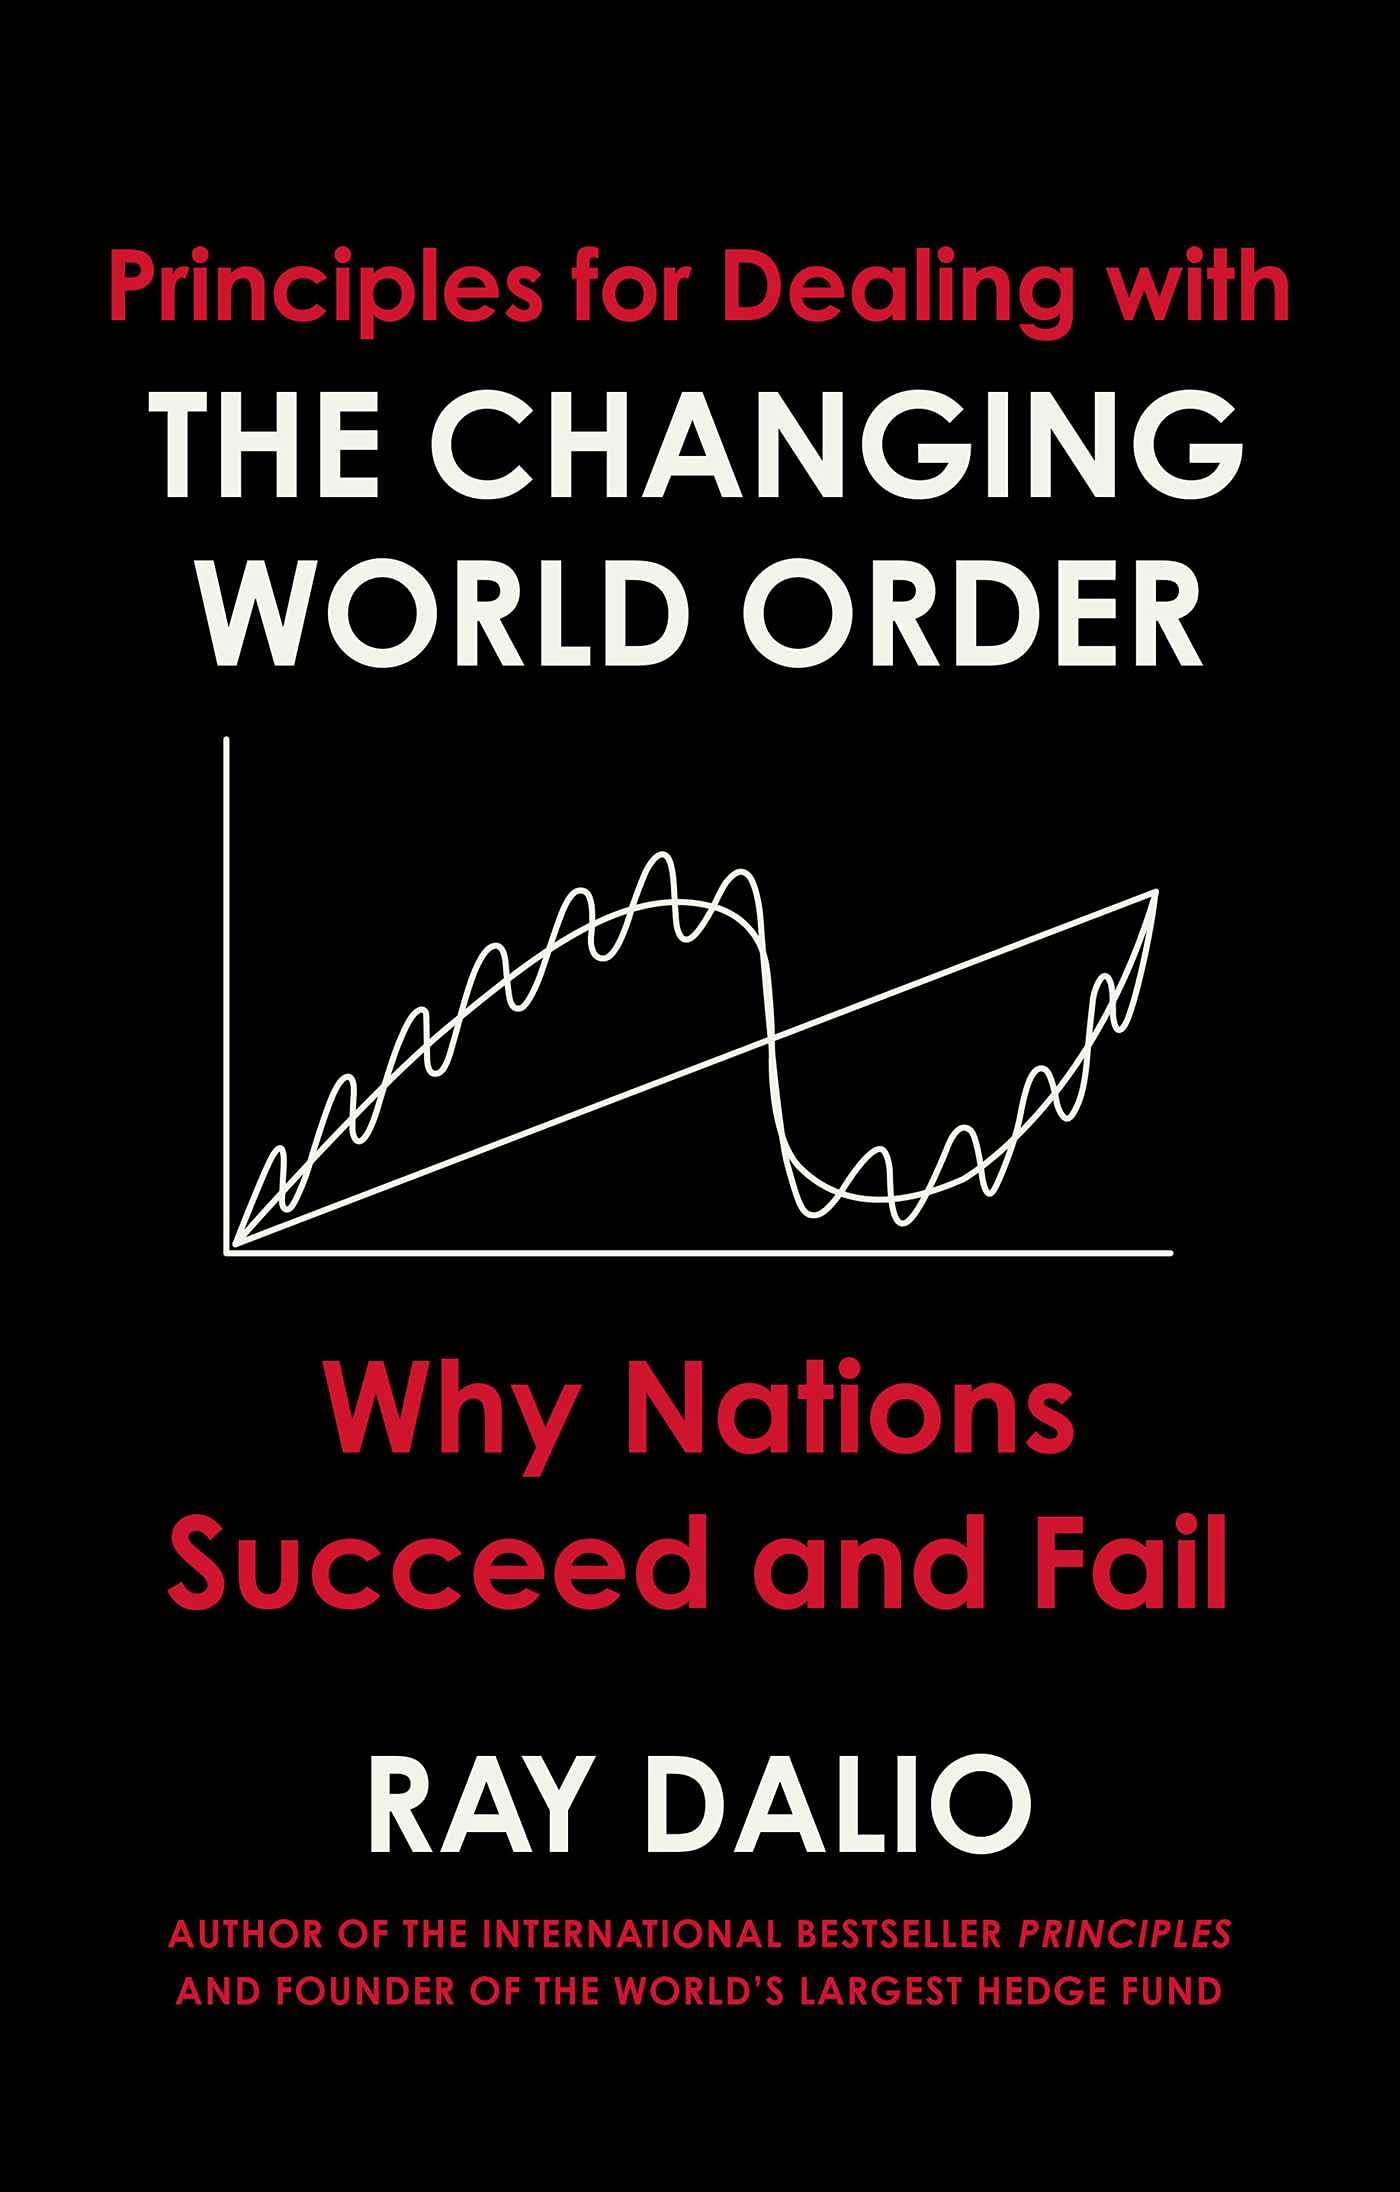 Changing World Order